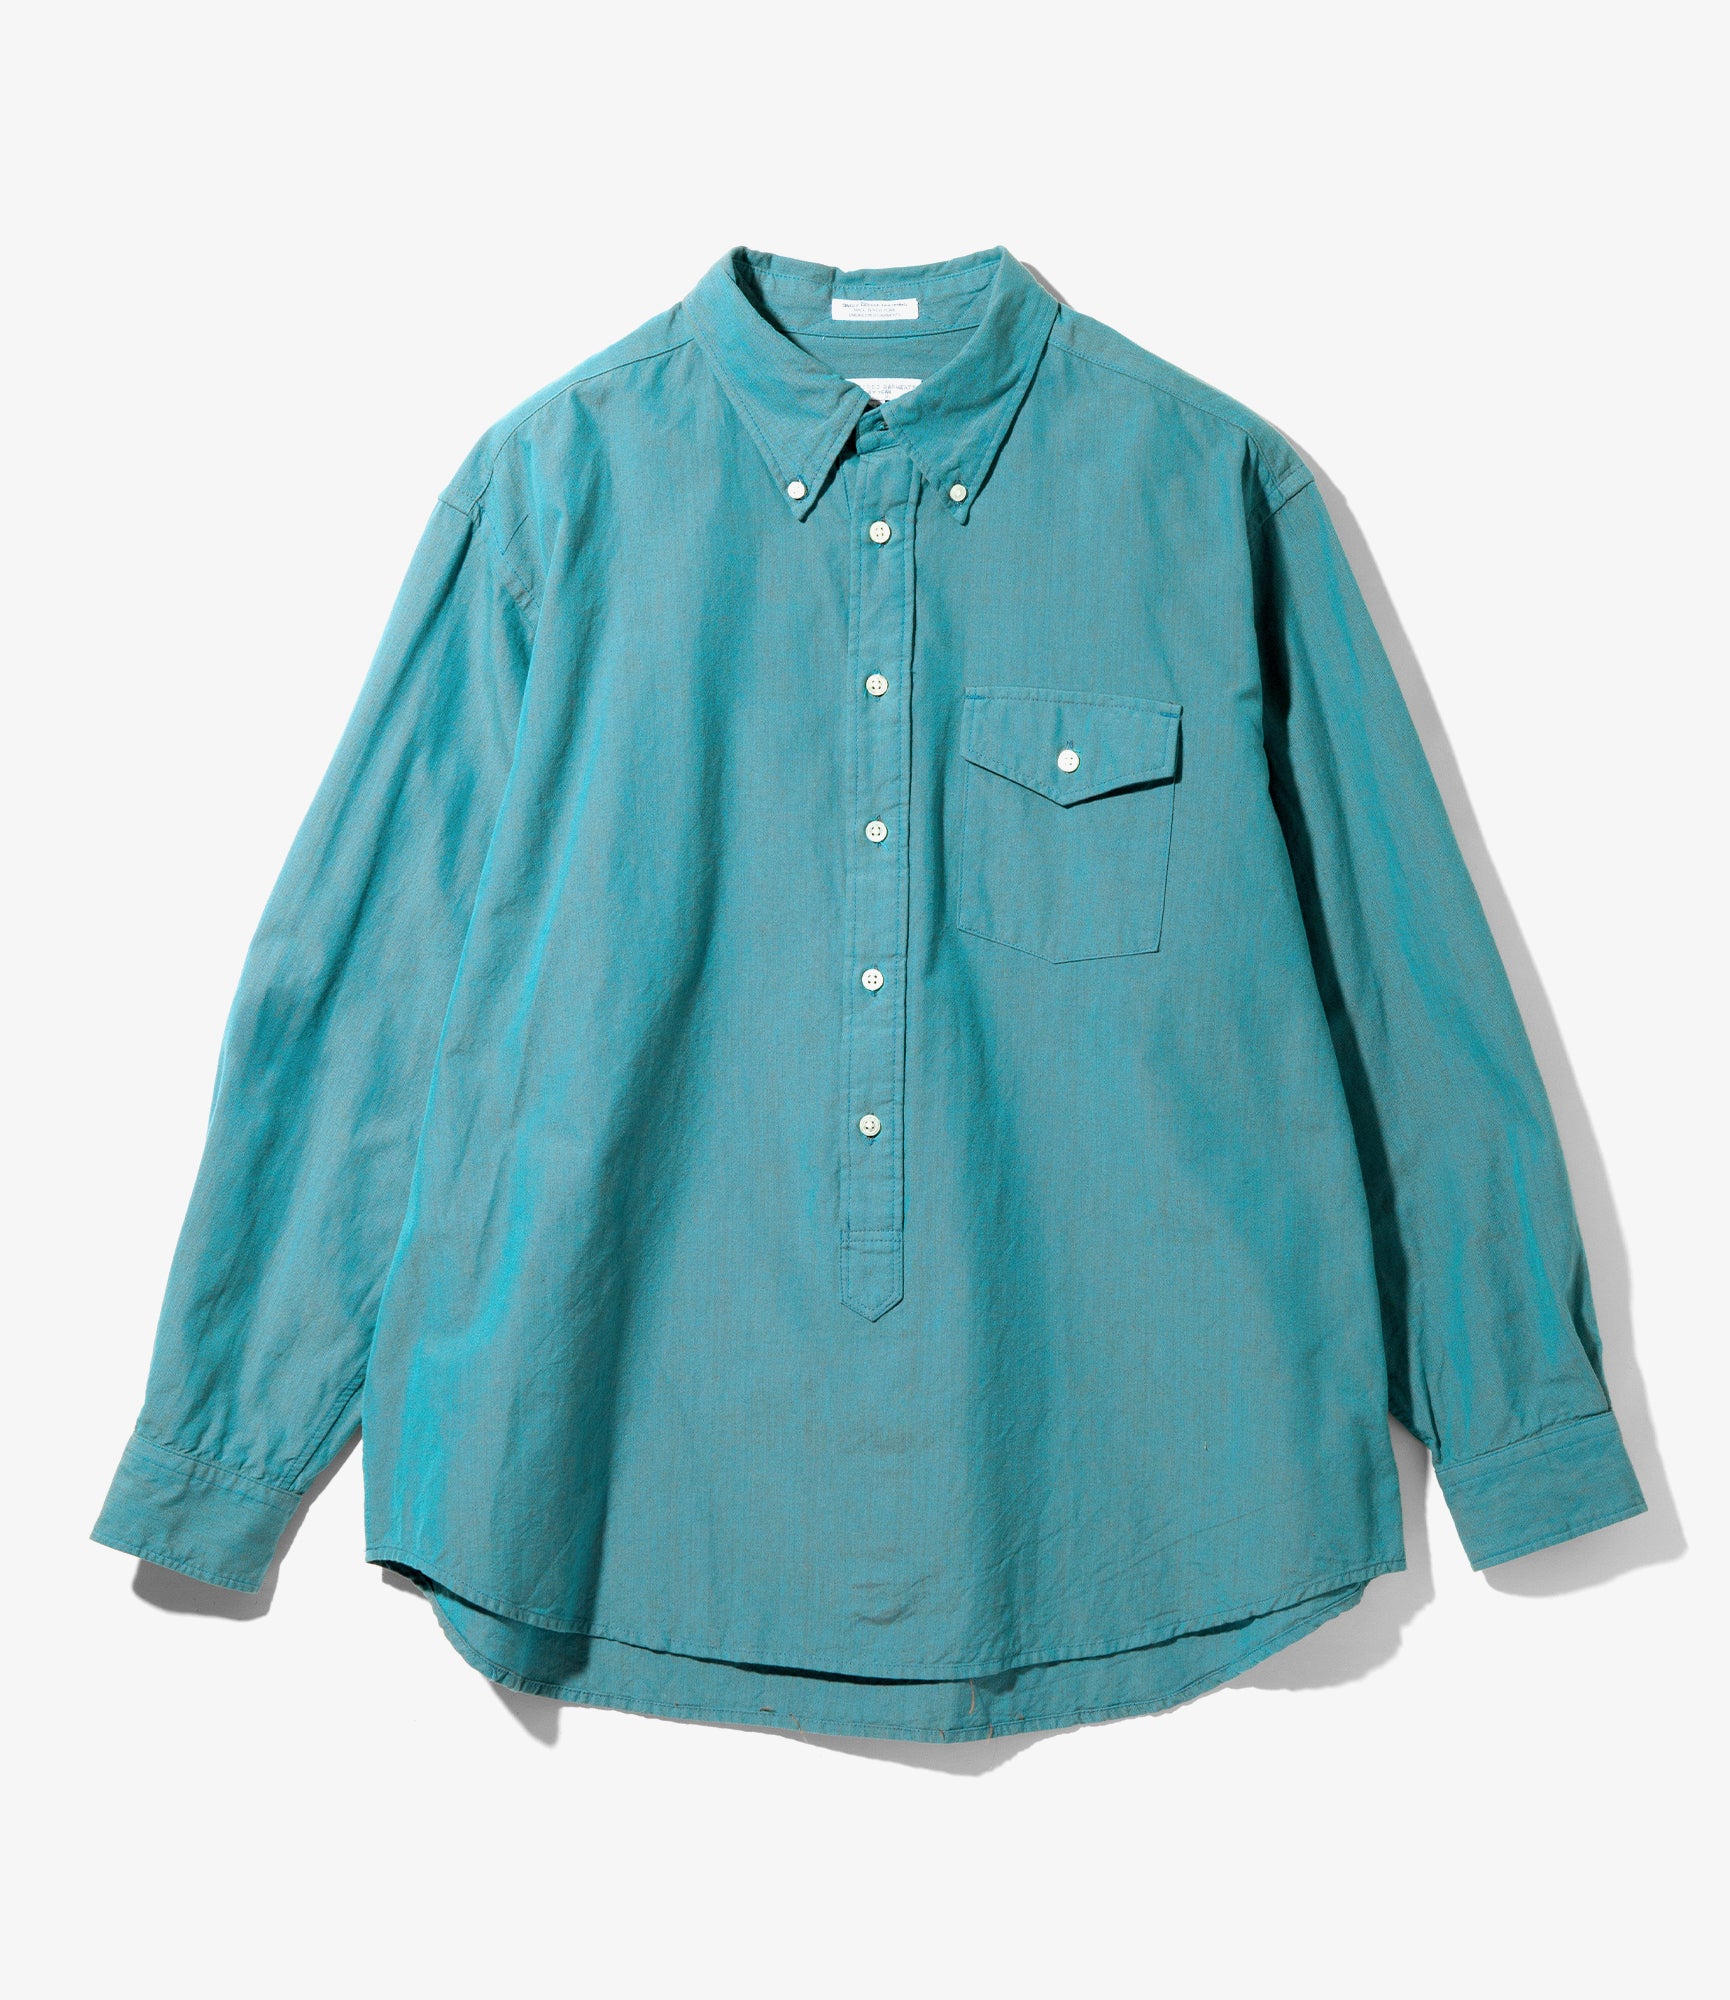 Ivy BD Shirt - Jade Cotton Iridescent